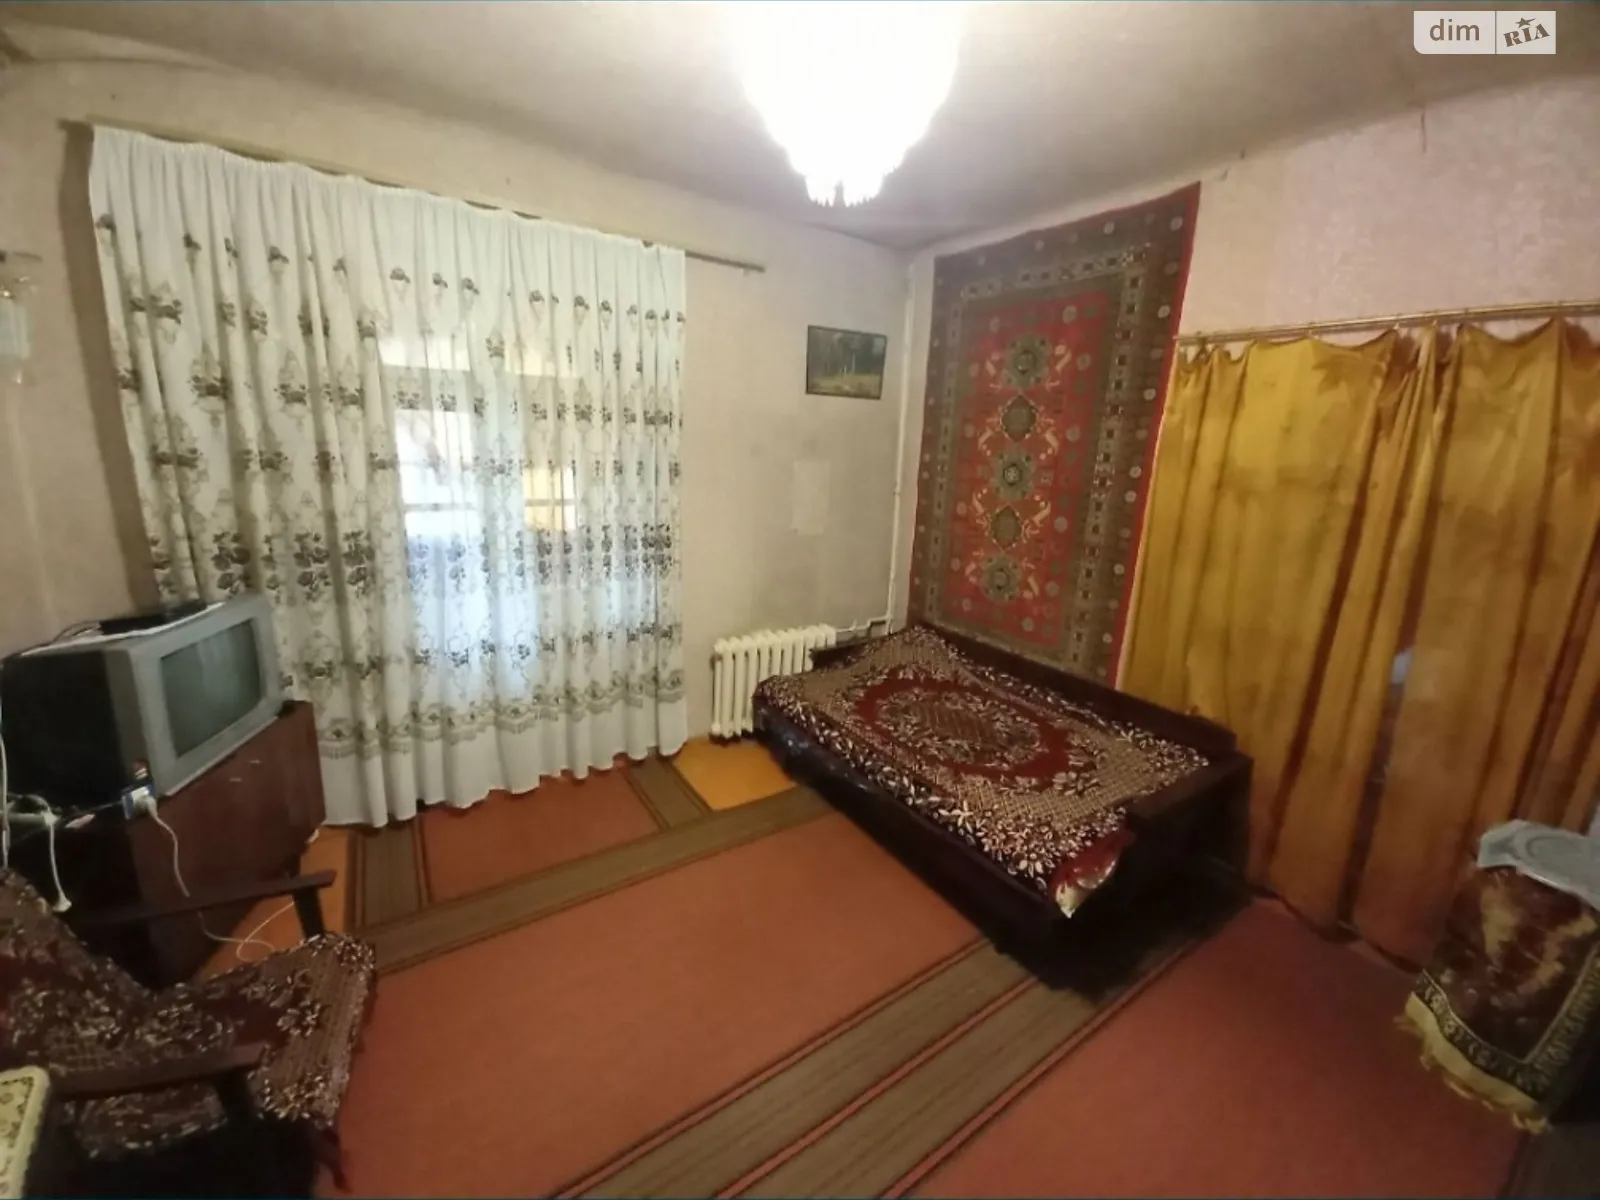 Сдается в аренду комната 40 кв. м в Николаеве, цена: 1500 грн